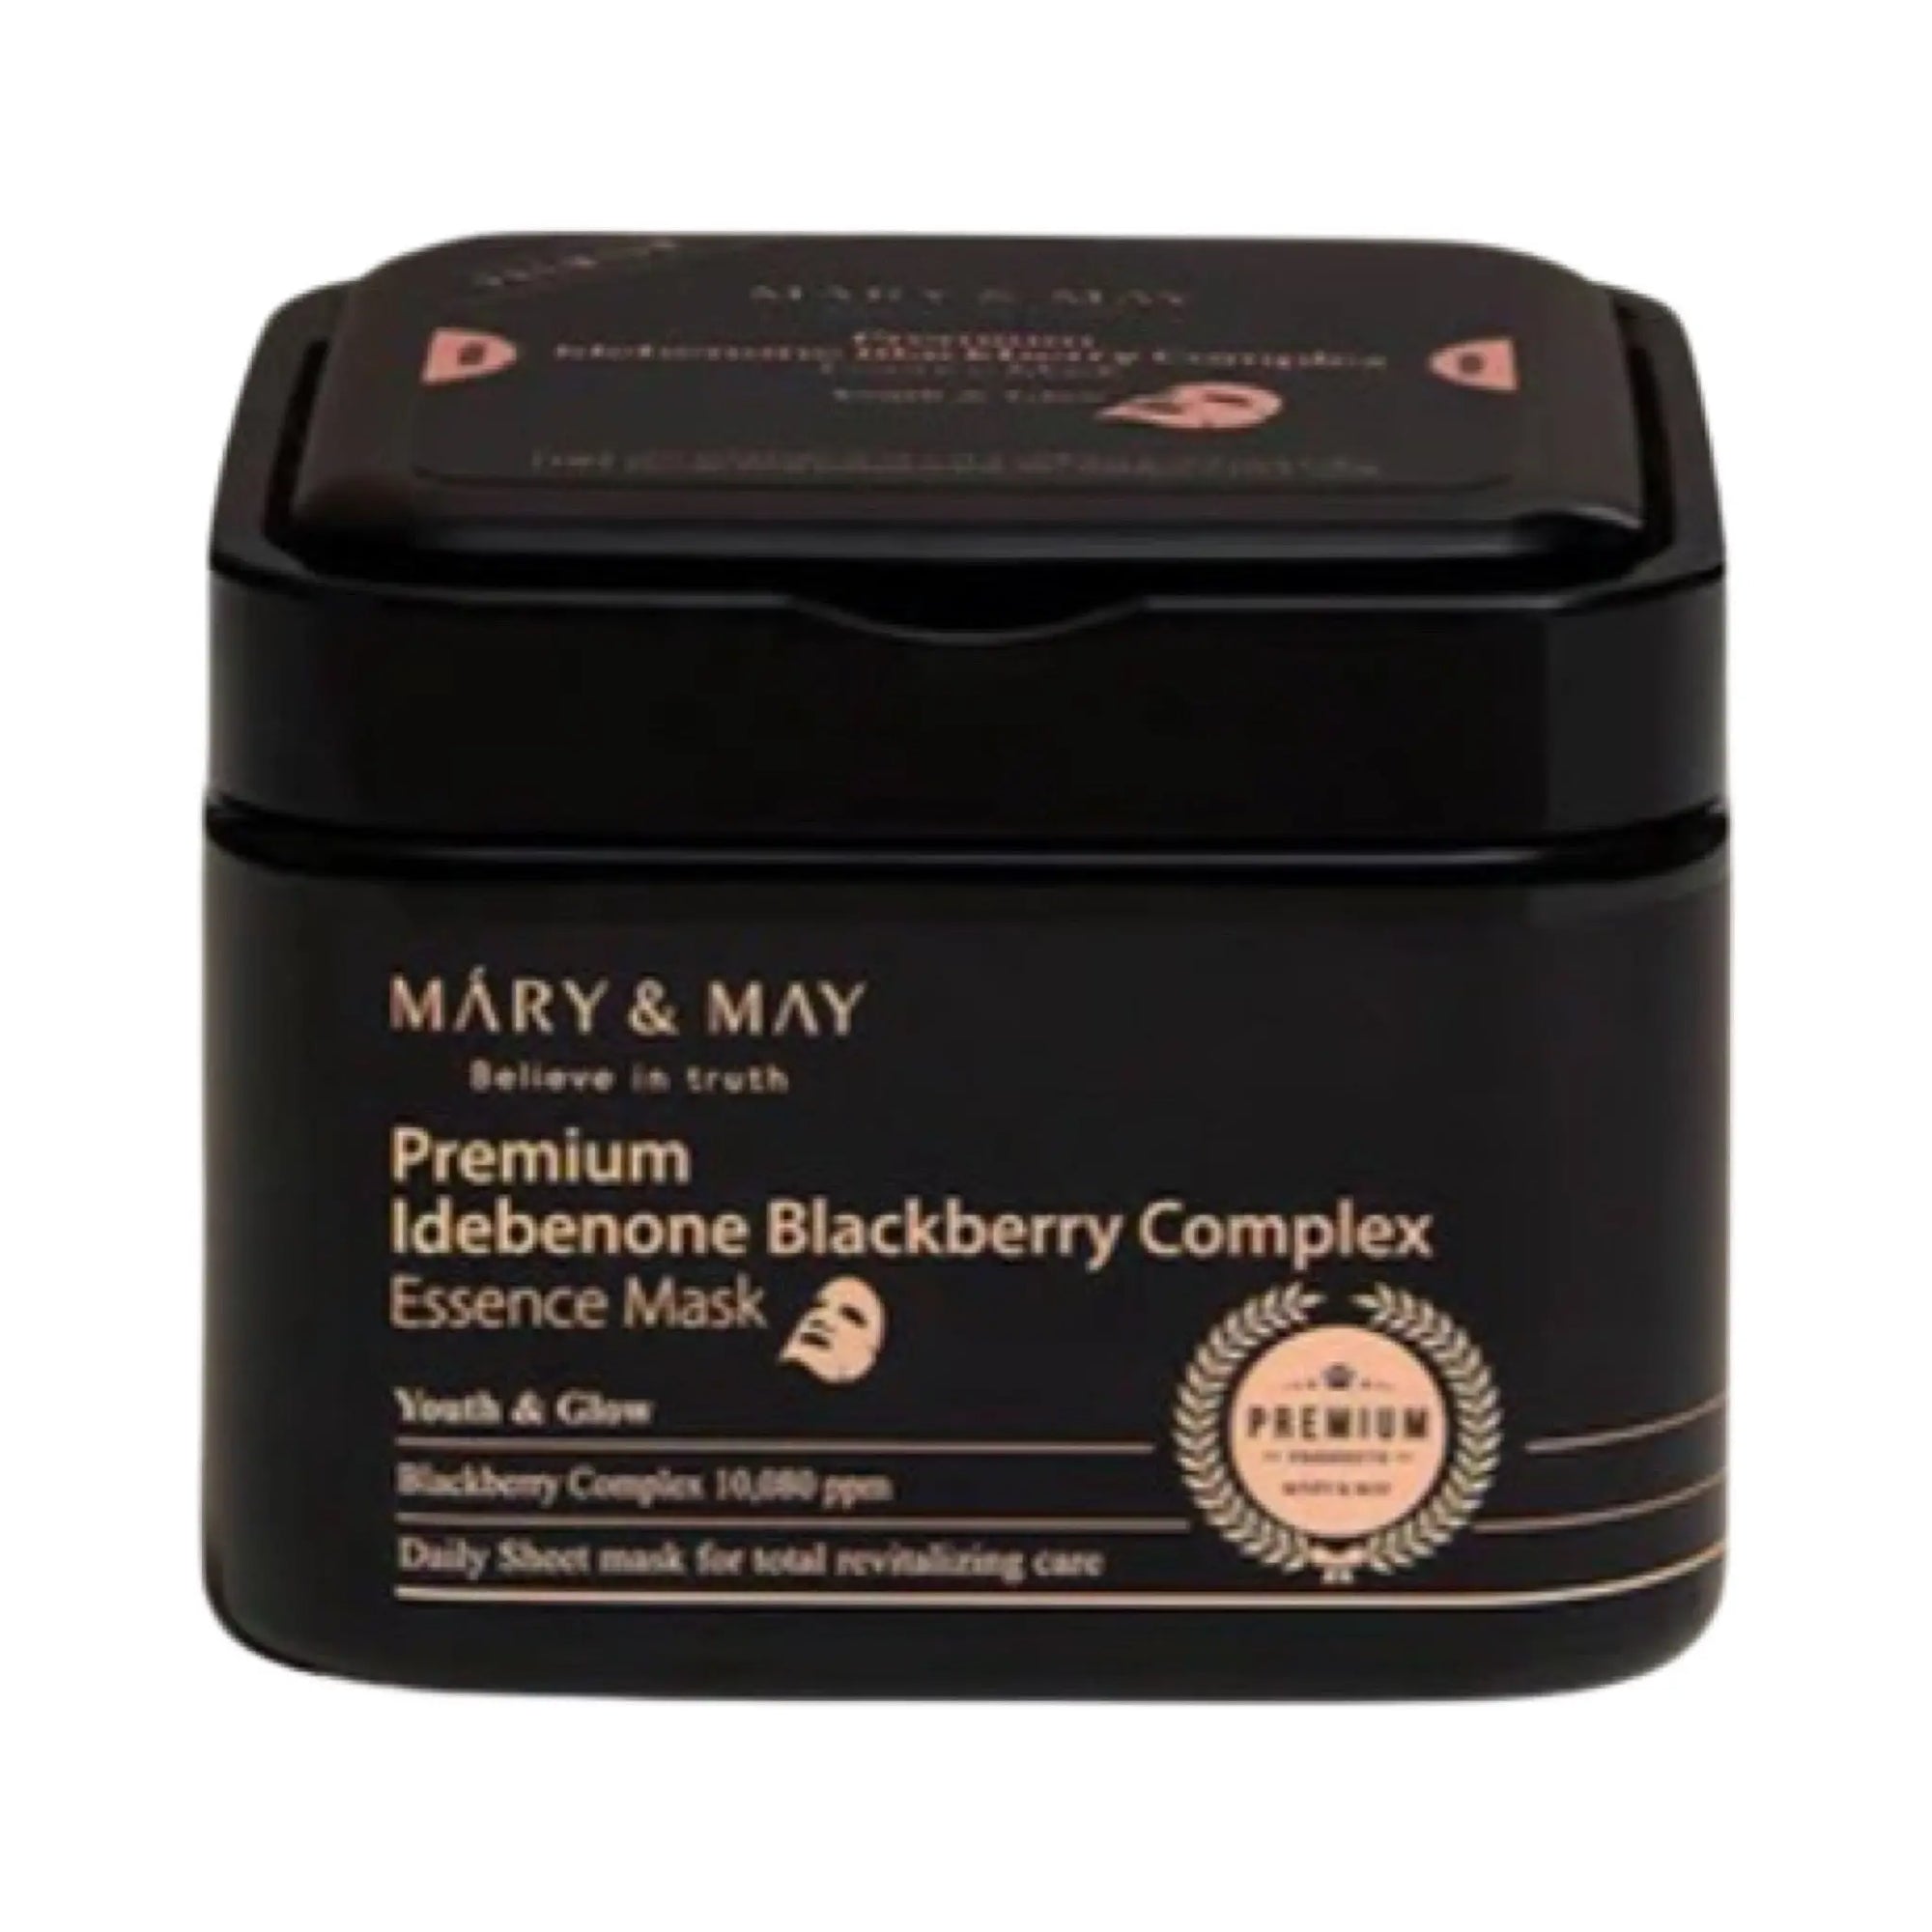 Mary & May - Premium Idebenone Blackberry Complex Essence Mask (20pcs) Mary & May